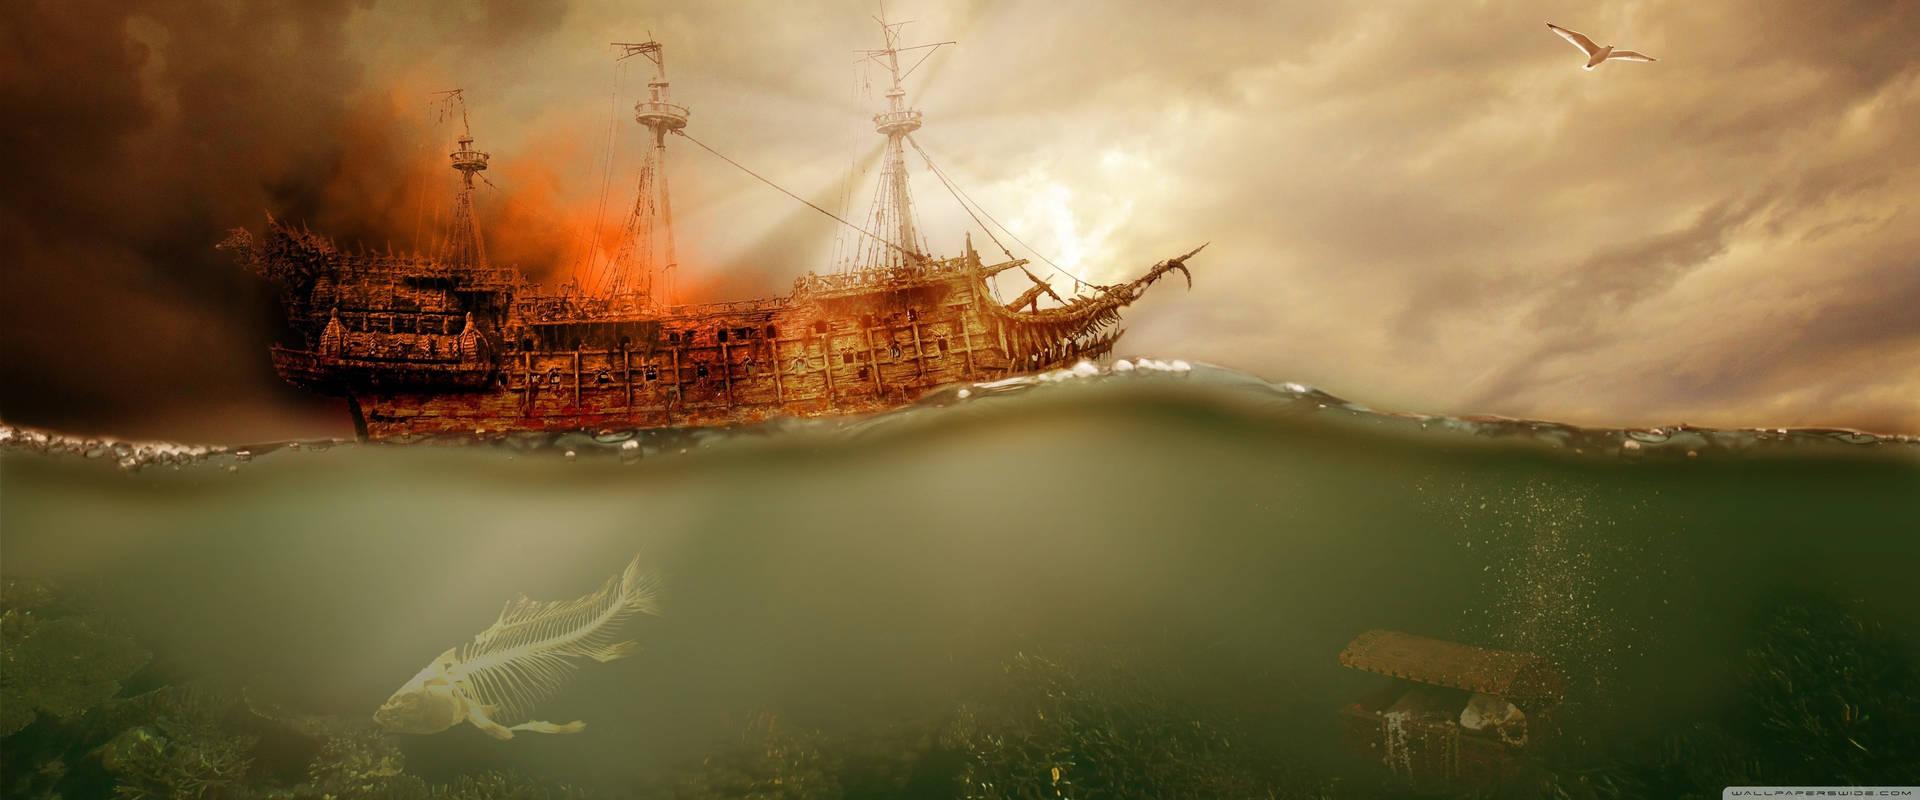 4k Pirate Ship On Fire Wallpaper